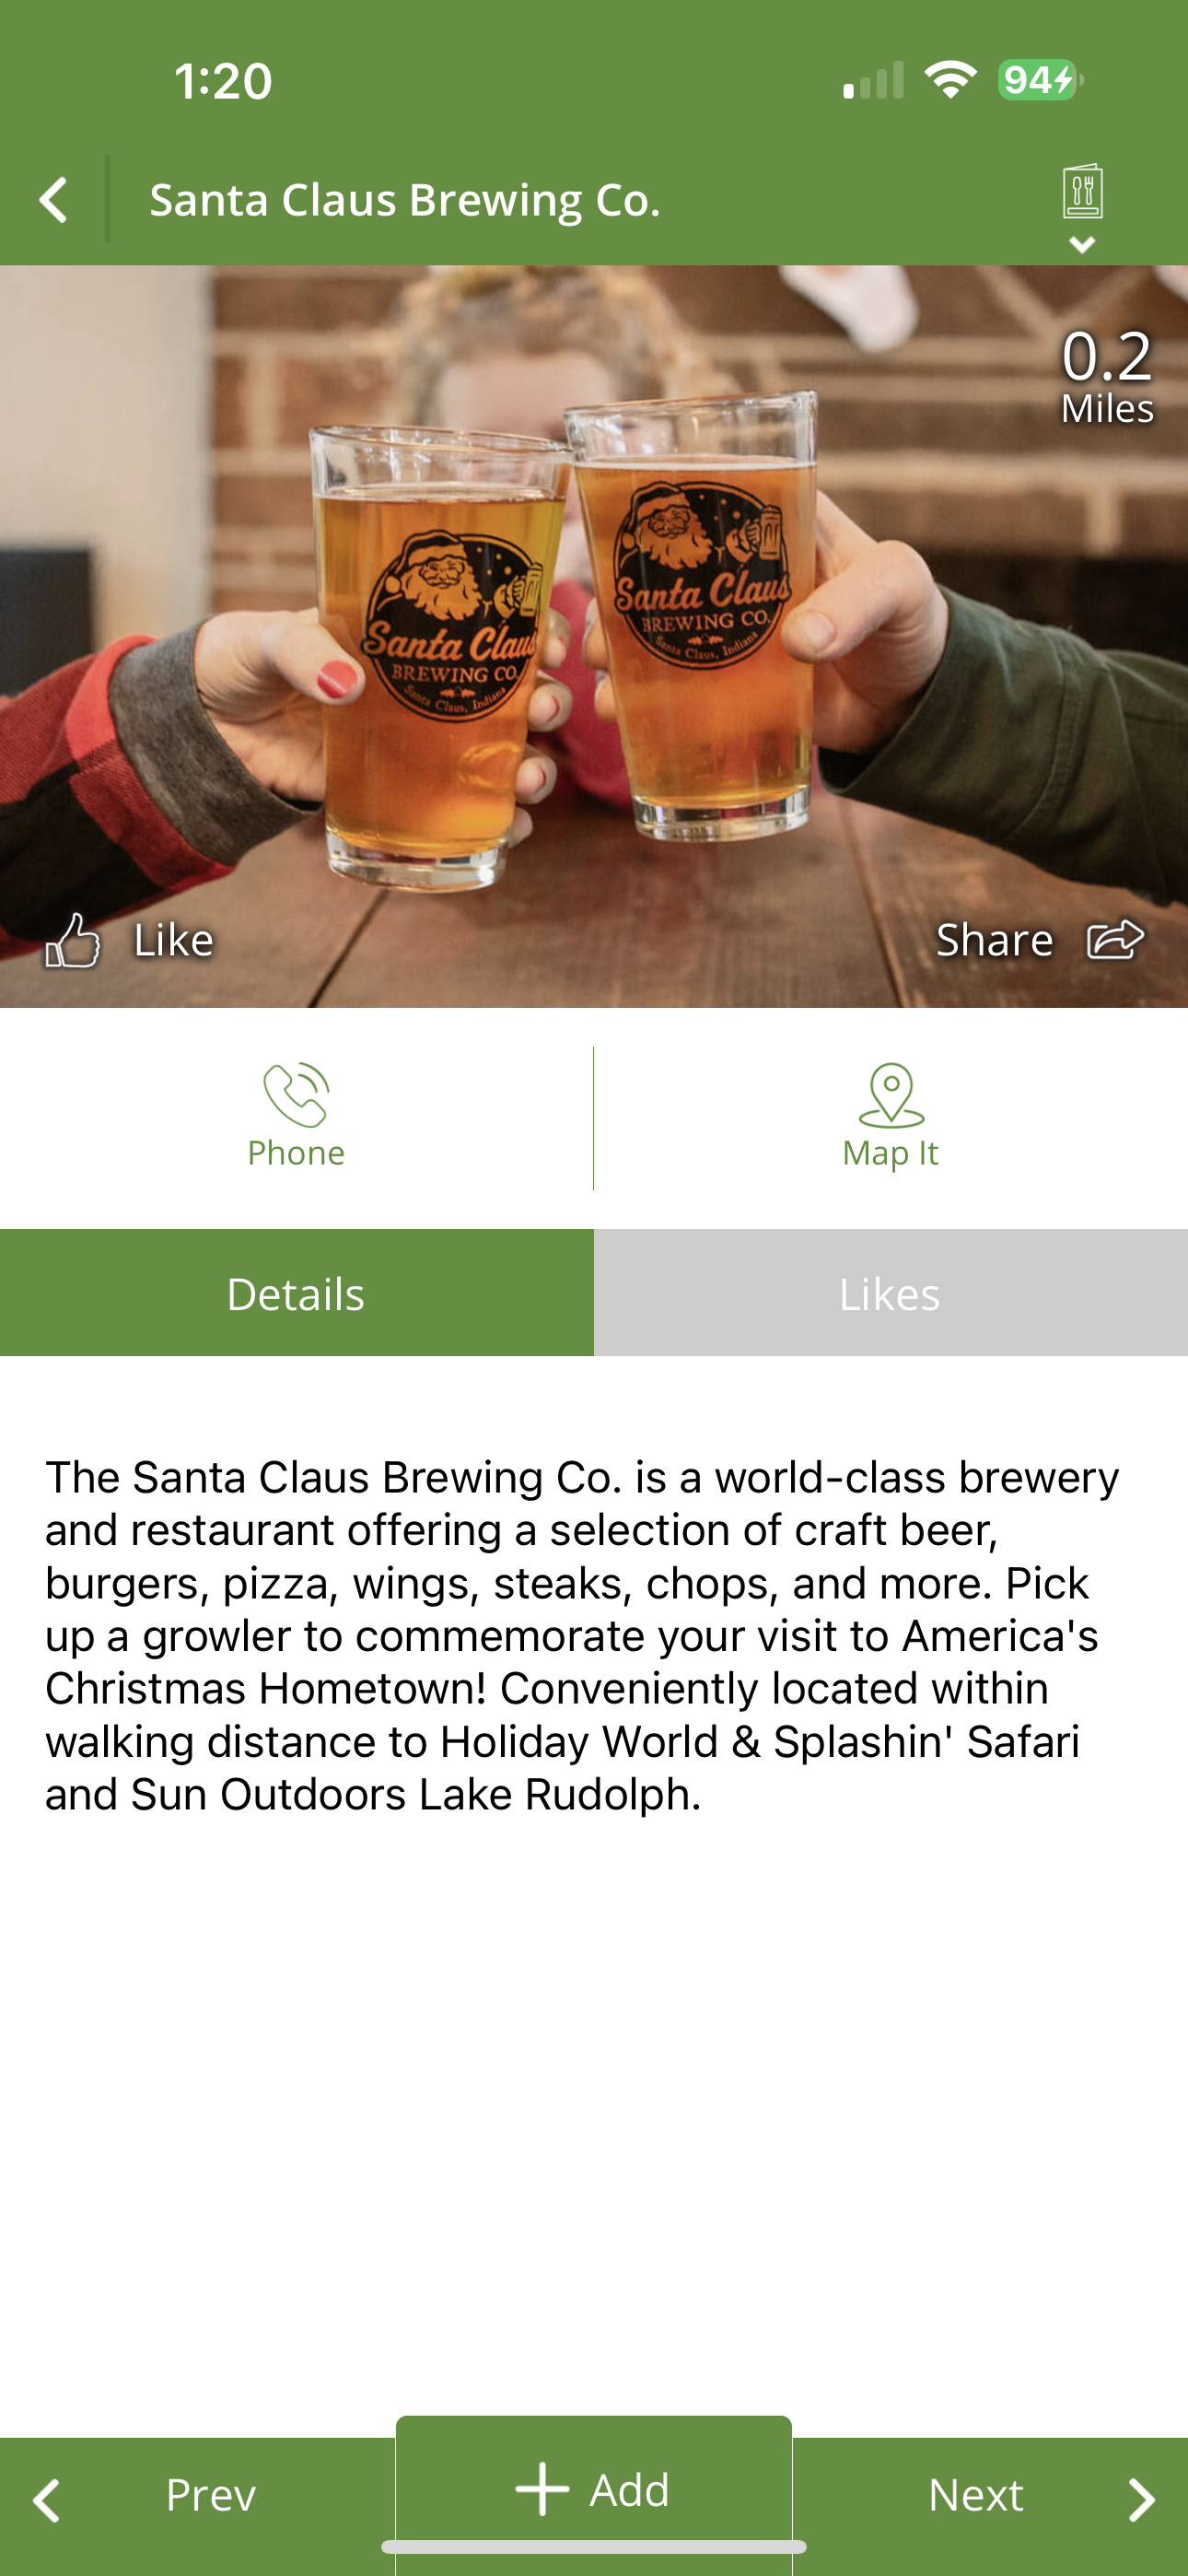 Visit-Widget-Trip-Planning-Santa-Claus-Brewing-Co.PNG